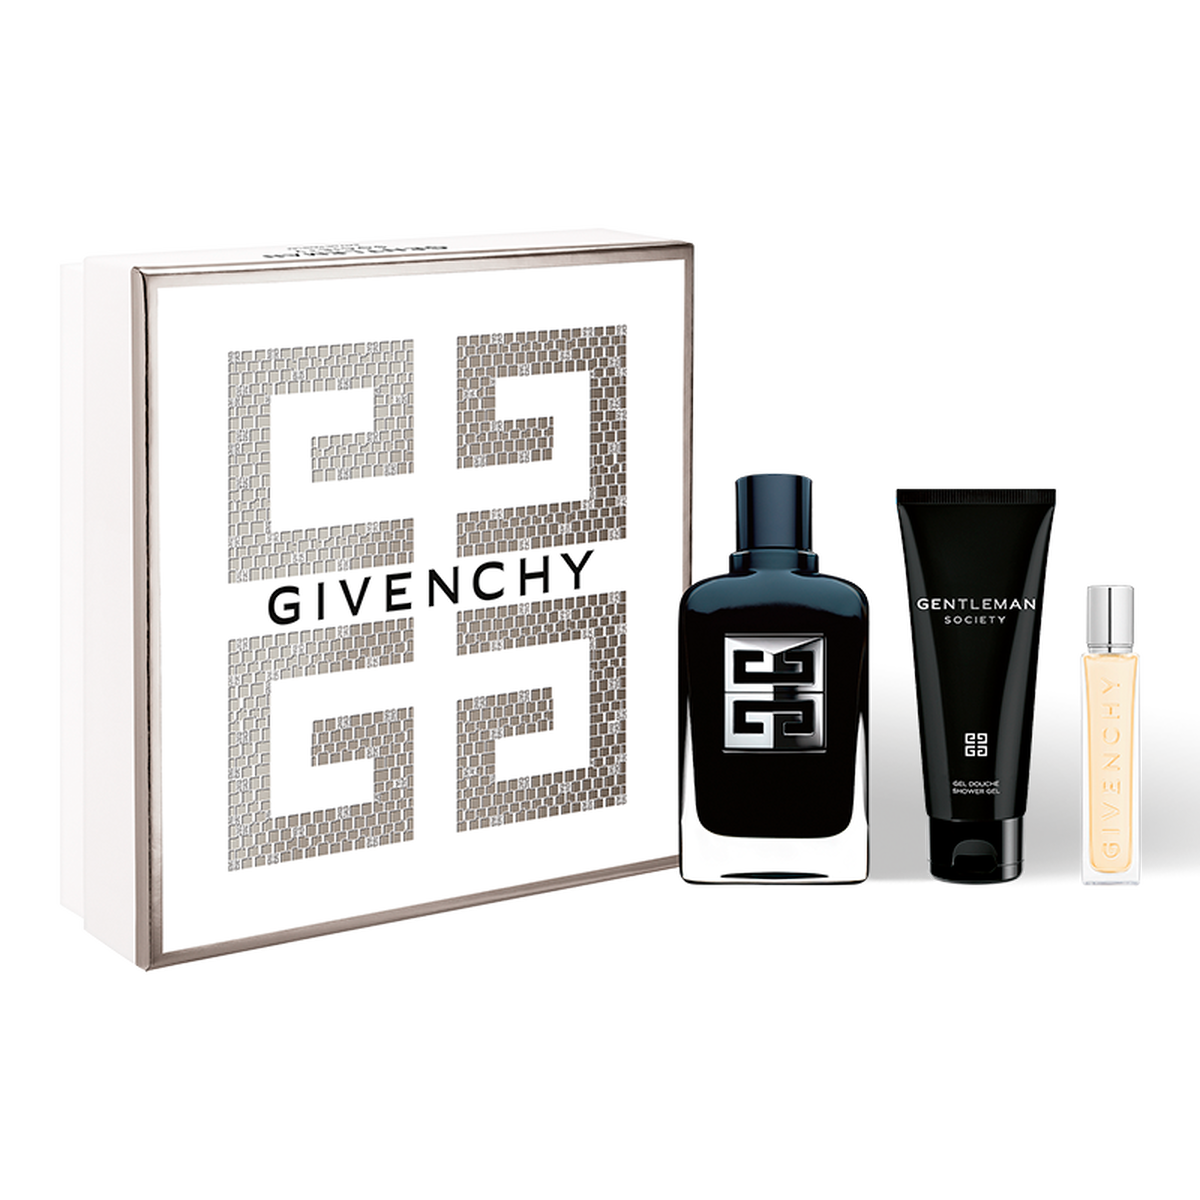 Image of Cofanetto Givenchy Gentleman - Society Eau de Parfum Profumo